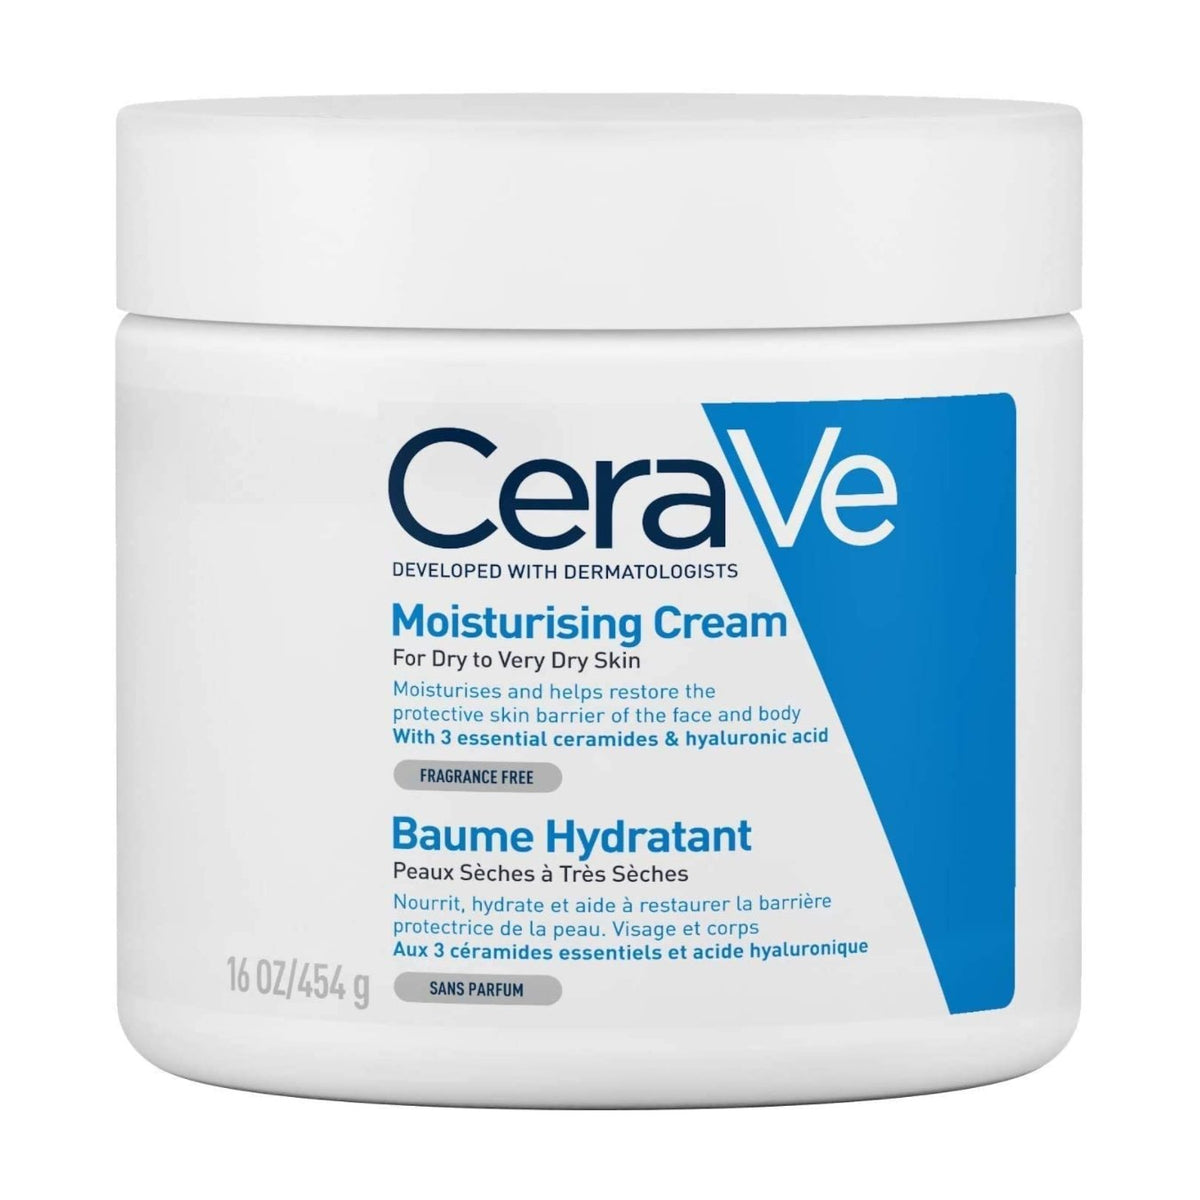 CeraVe Moisturising Cream for Dry to Very Dry Skin (16 OZ/454 g) CeraVe